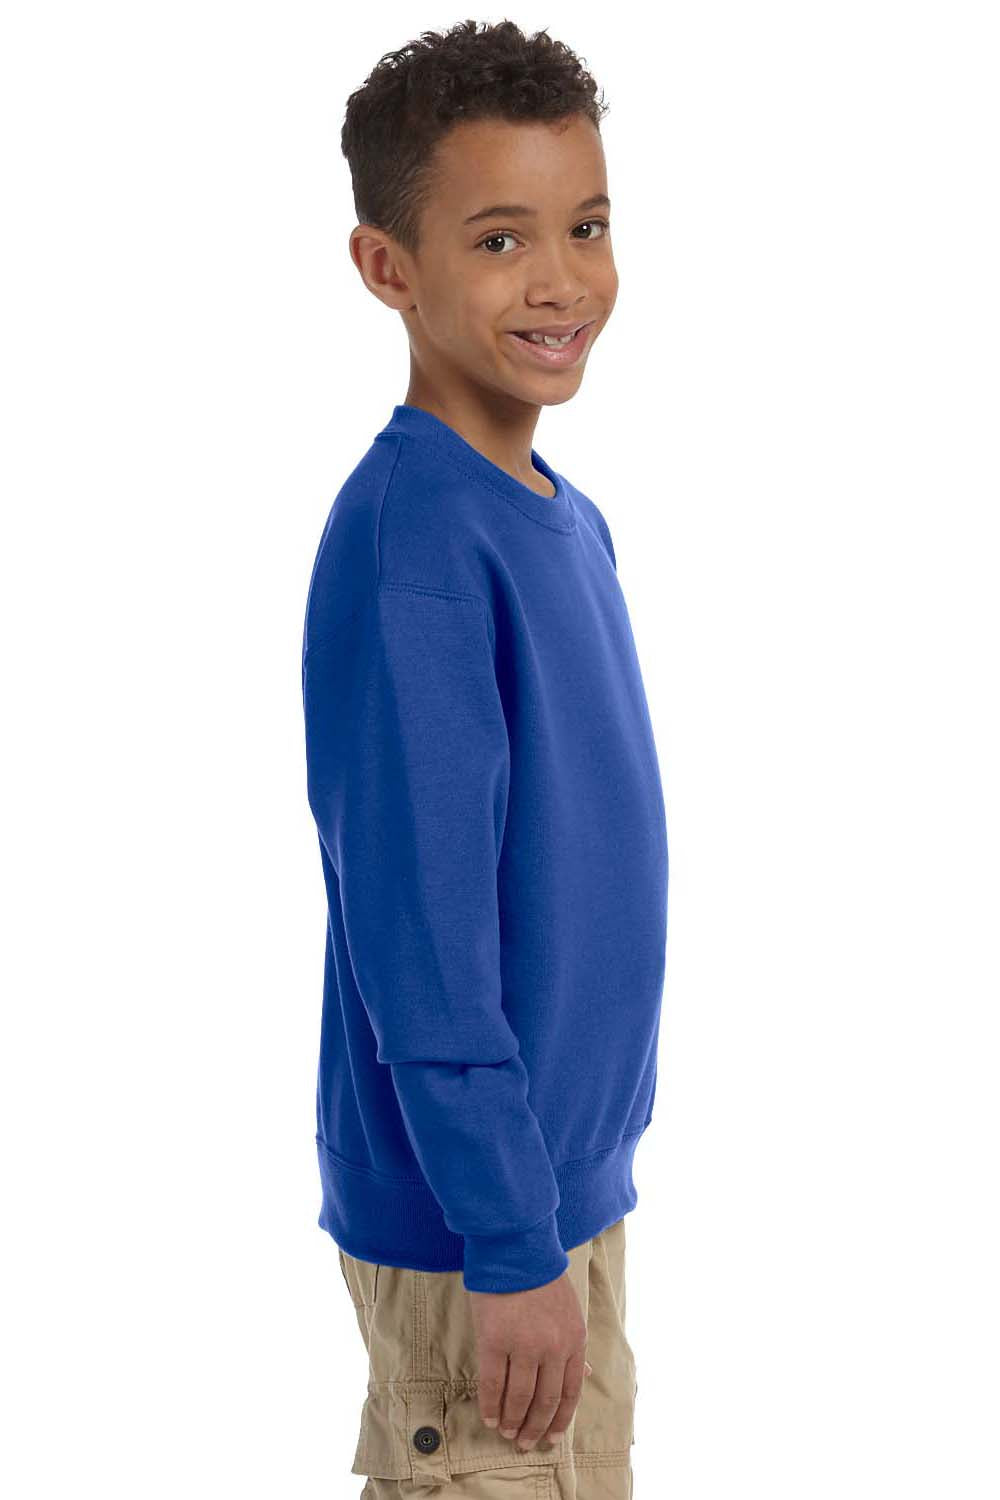 Jerzees 562B Youth NuBlend Fleece Crewneck Sweatshirt Royal Blue Side